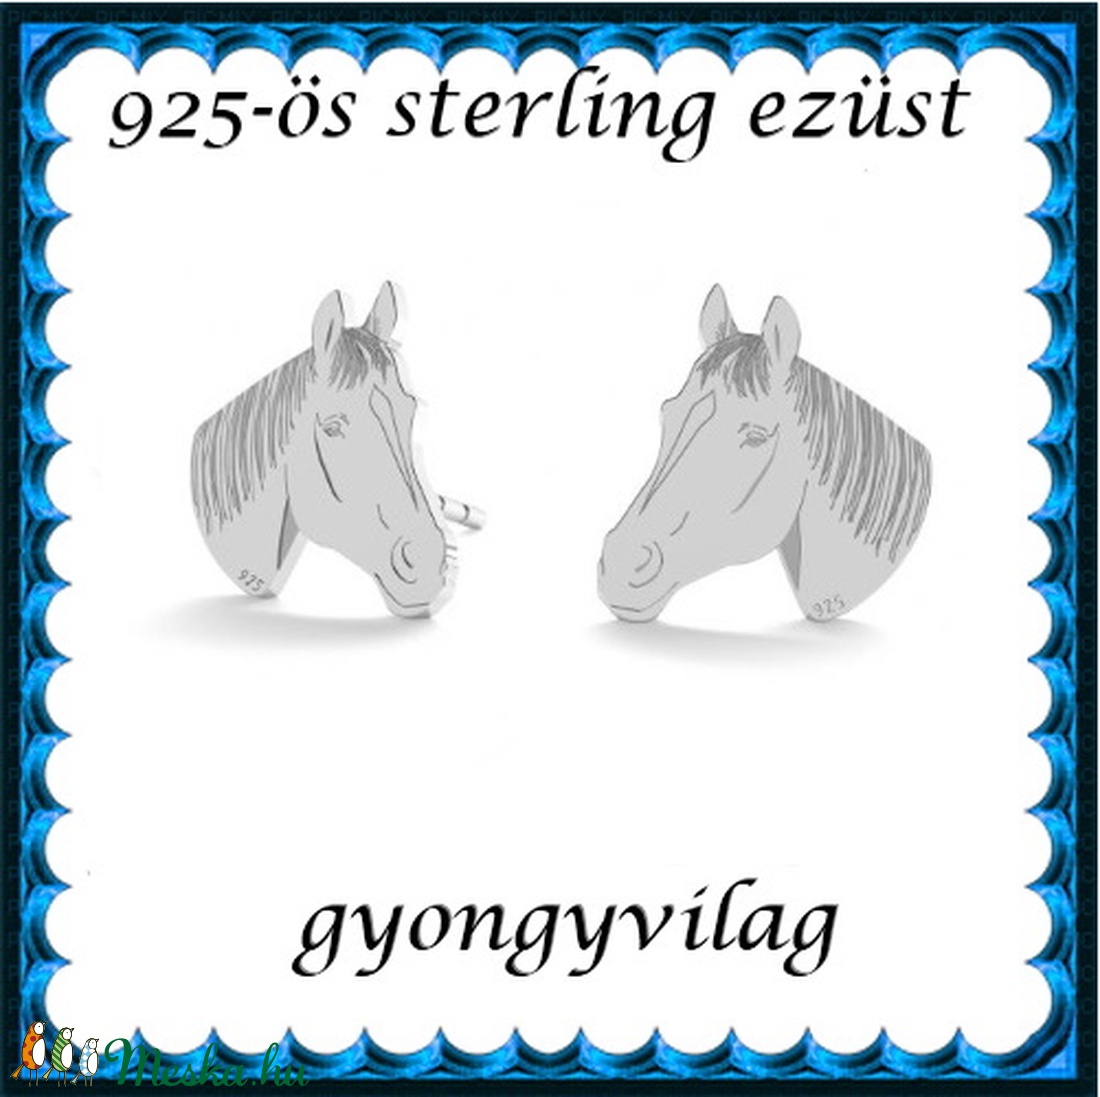  925-ös sterling ezüst: fülbevaló  EF 06 - ékszer - fülbevaló - pötty fülbevaló - Meska.hu